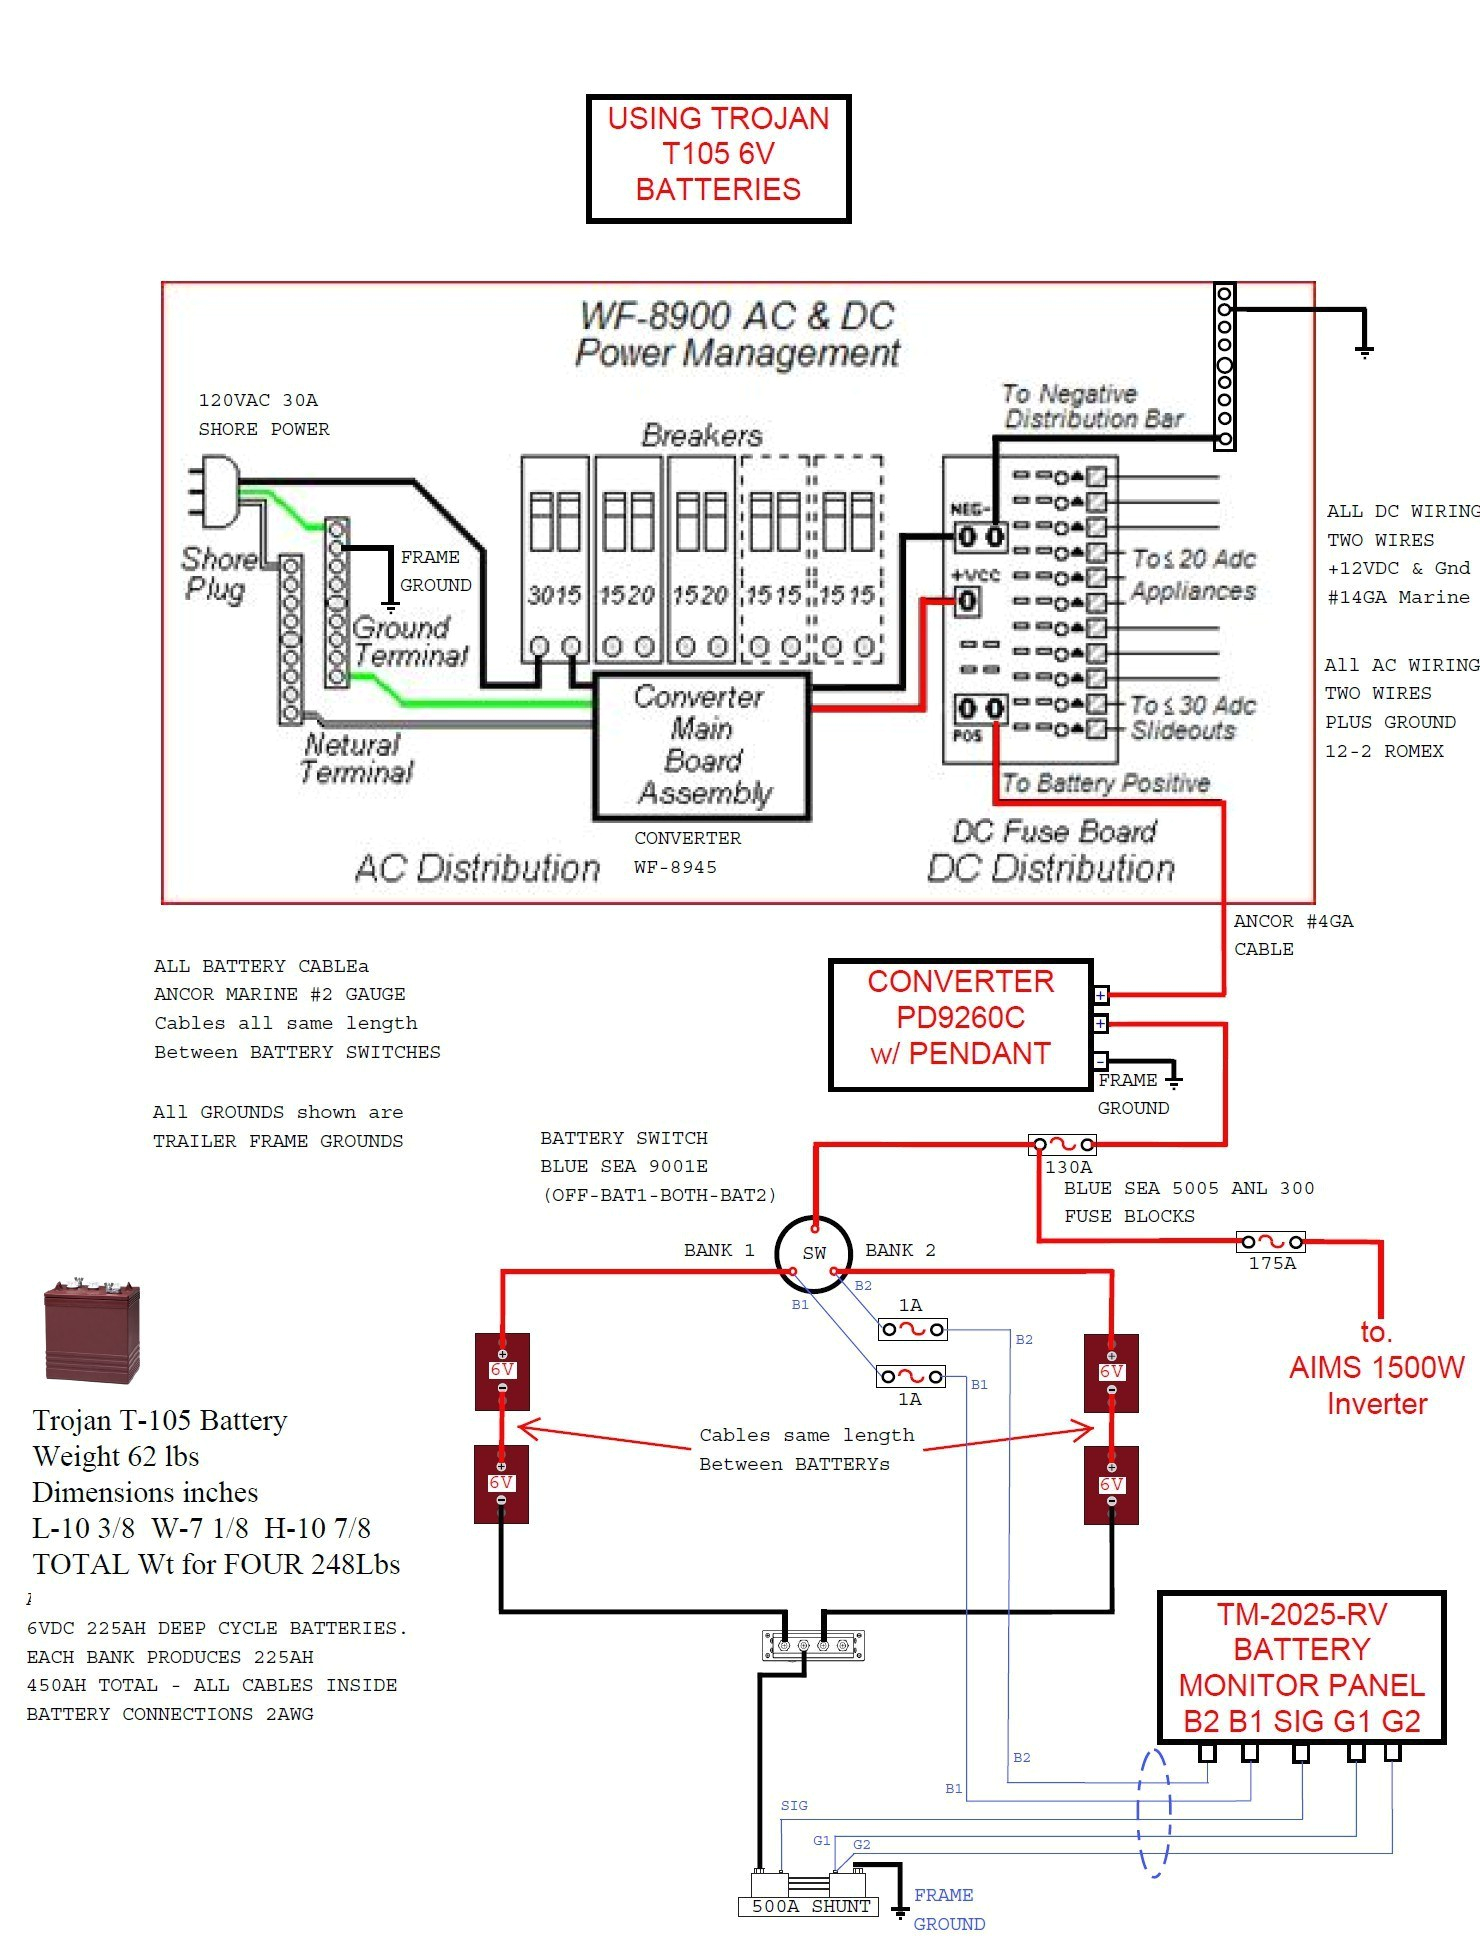 rv monitor panel wiring diagram my wiring diagram keystone monitor panel wiring diagram